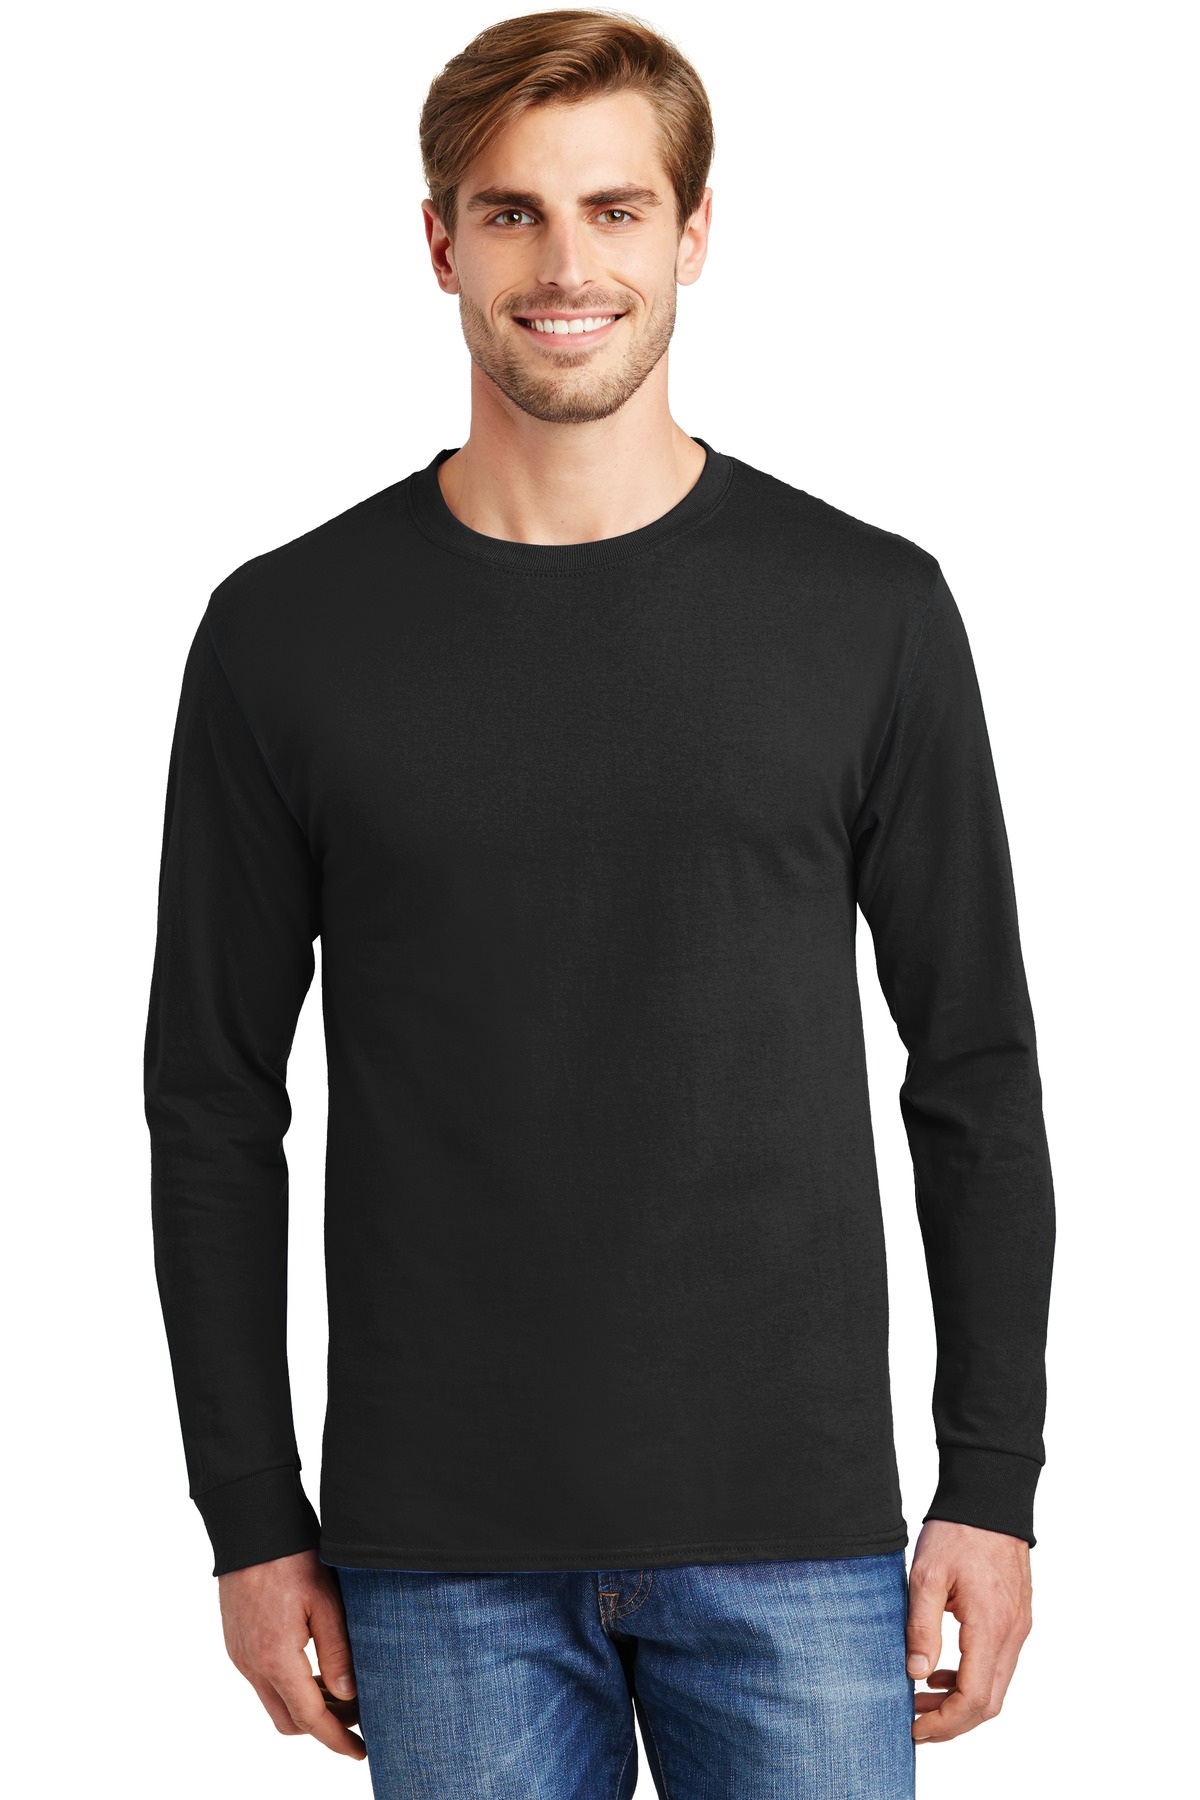 Hanes - Tagless 100% Cotton Long Sleeve T-Shirt. 5586